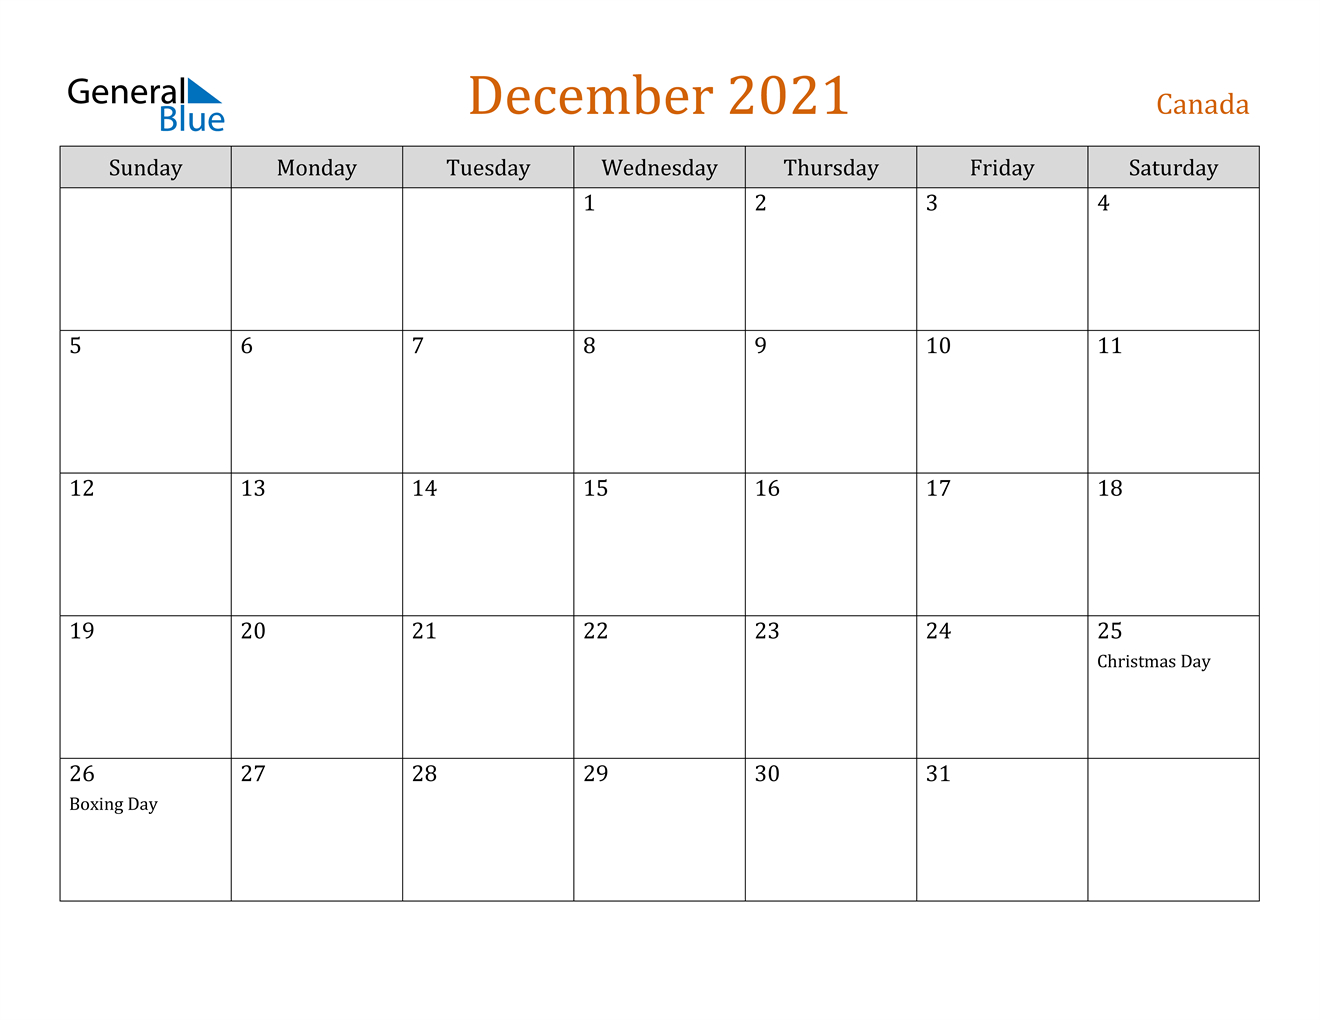 Catch December 2022 Calendar Pdf